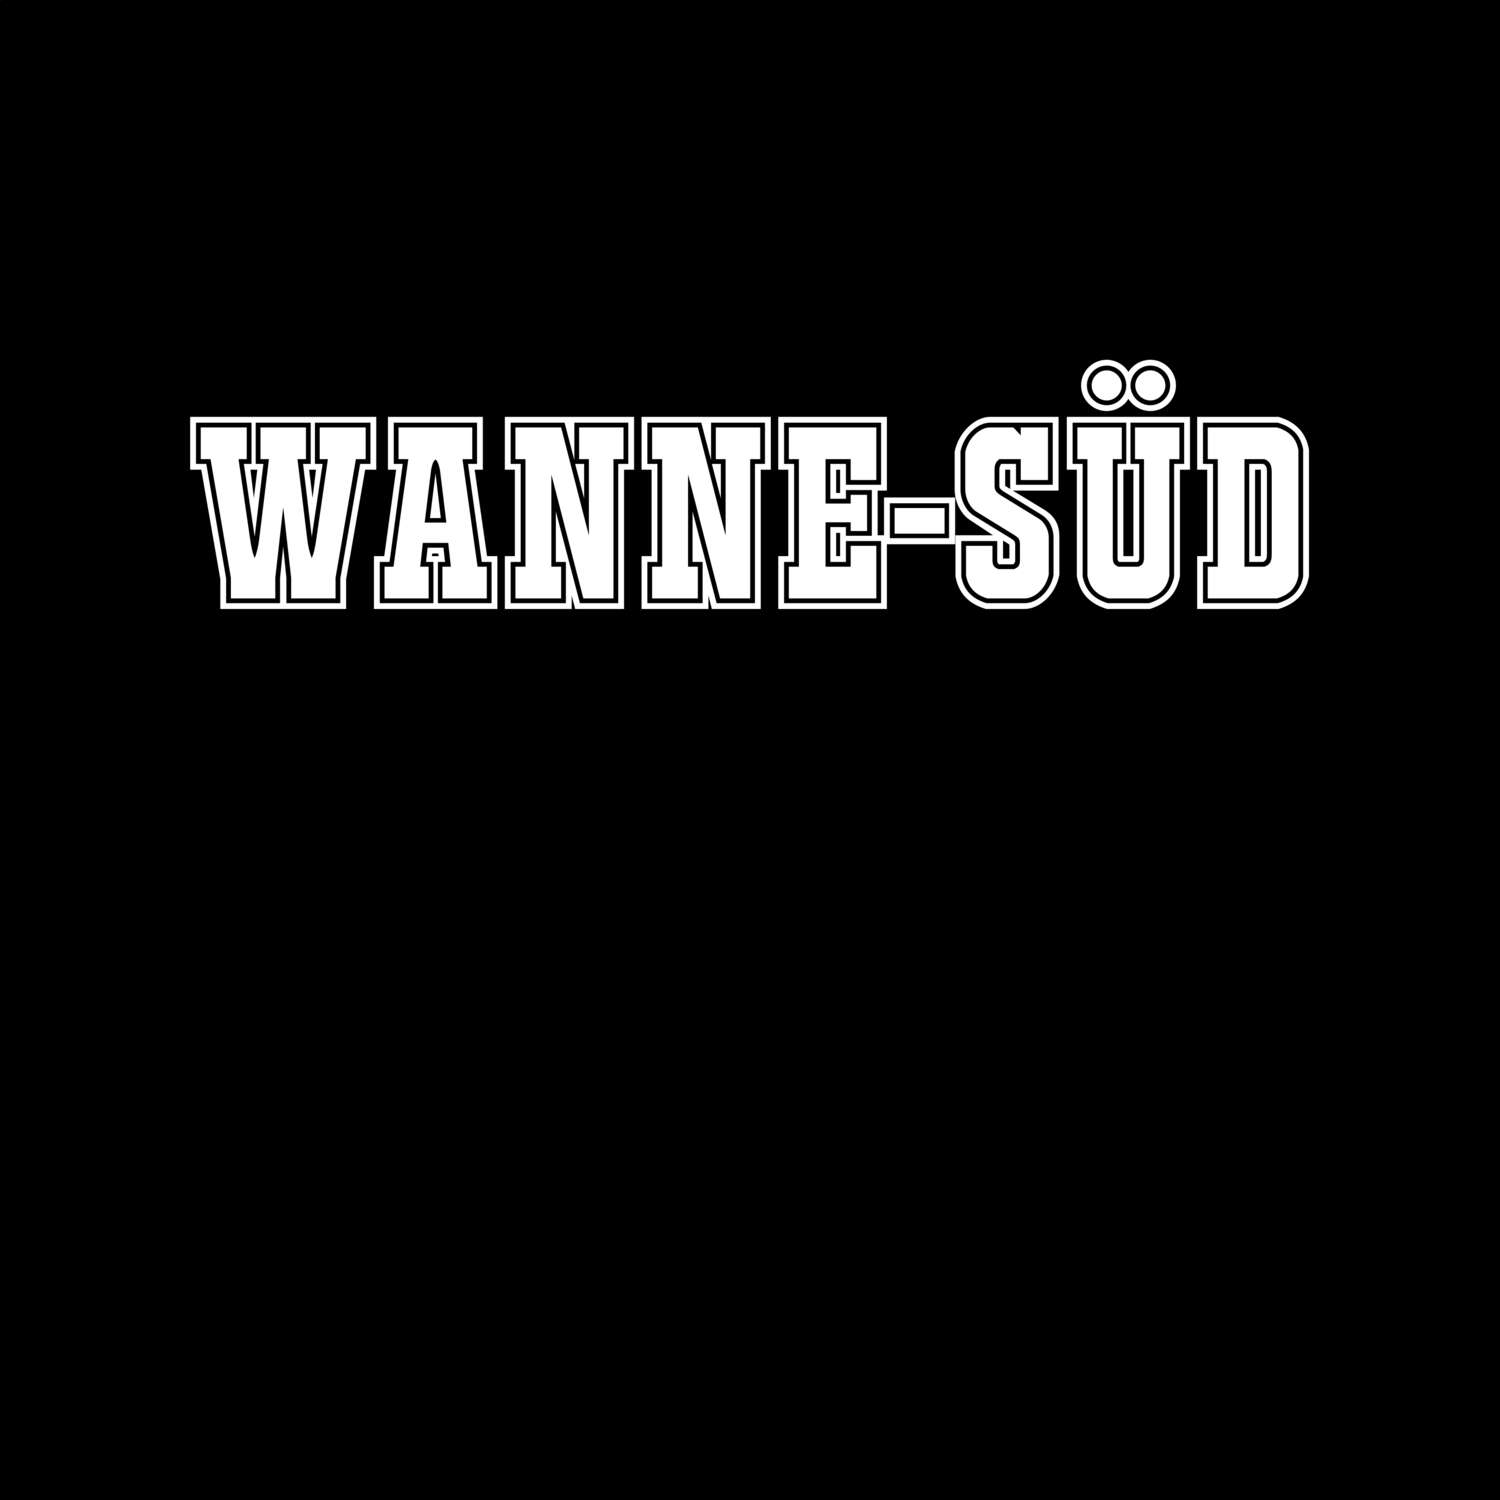 Wanne-Süd T-Shirt »Classic«